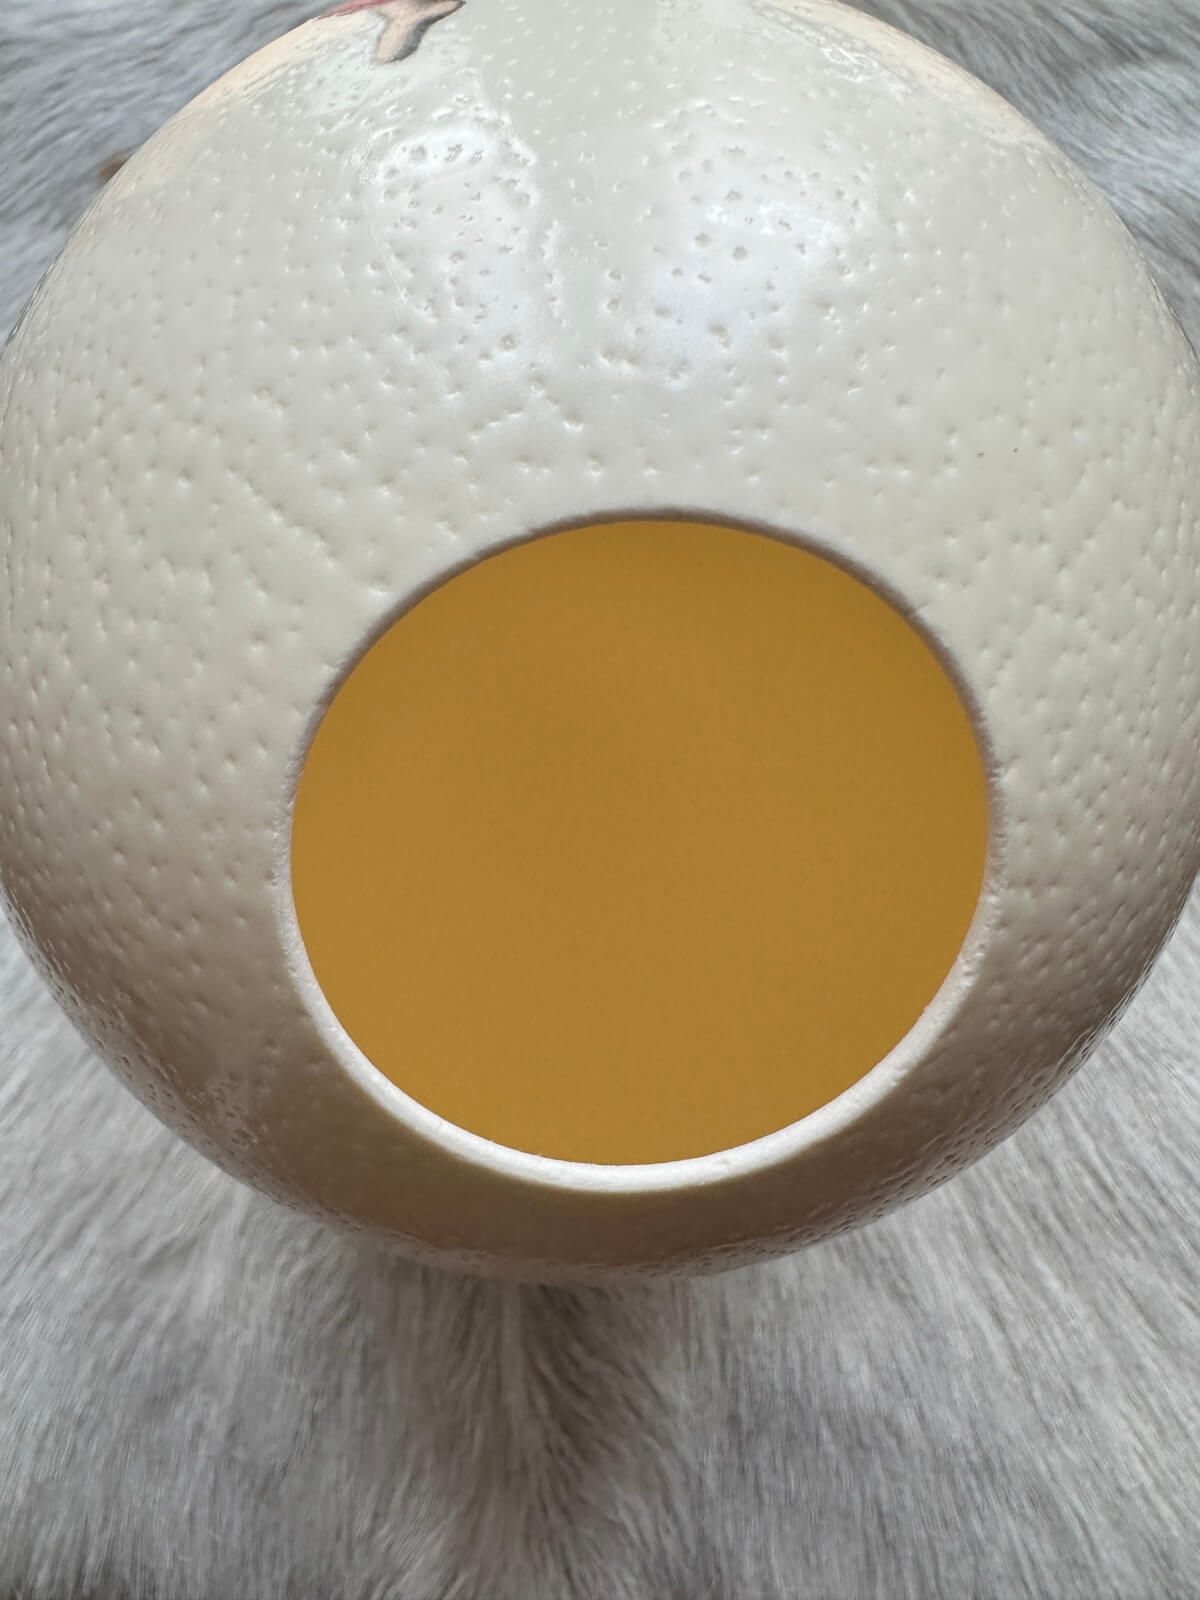 Ostrich egg lamp "Angel", real egg with radiant, feel-good light